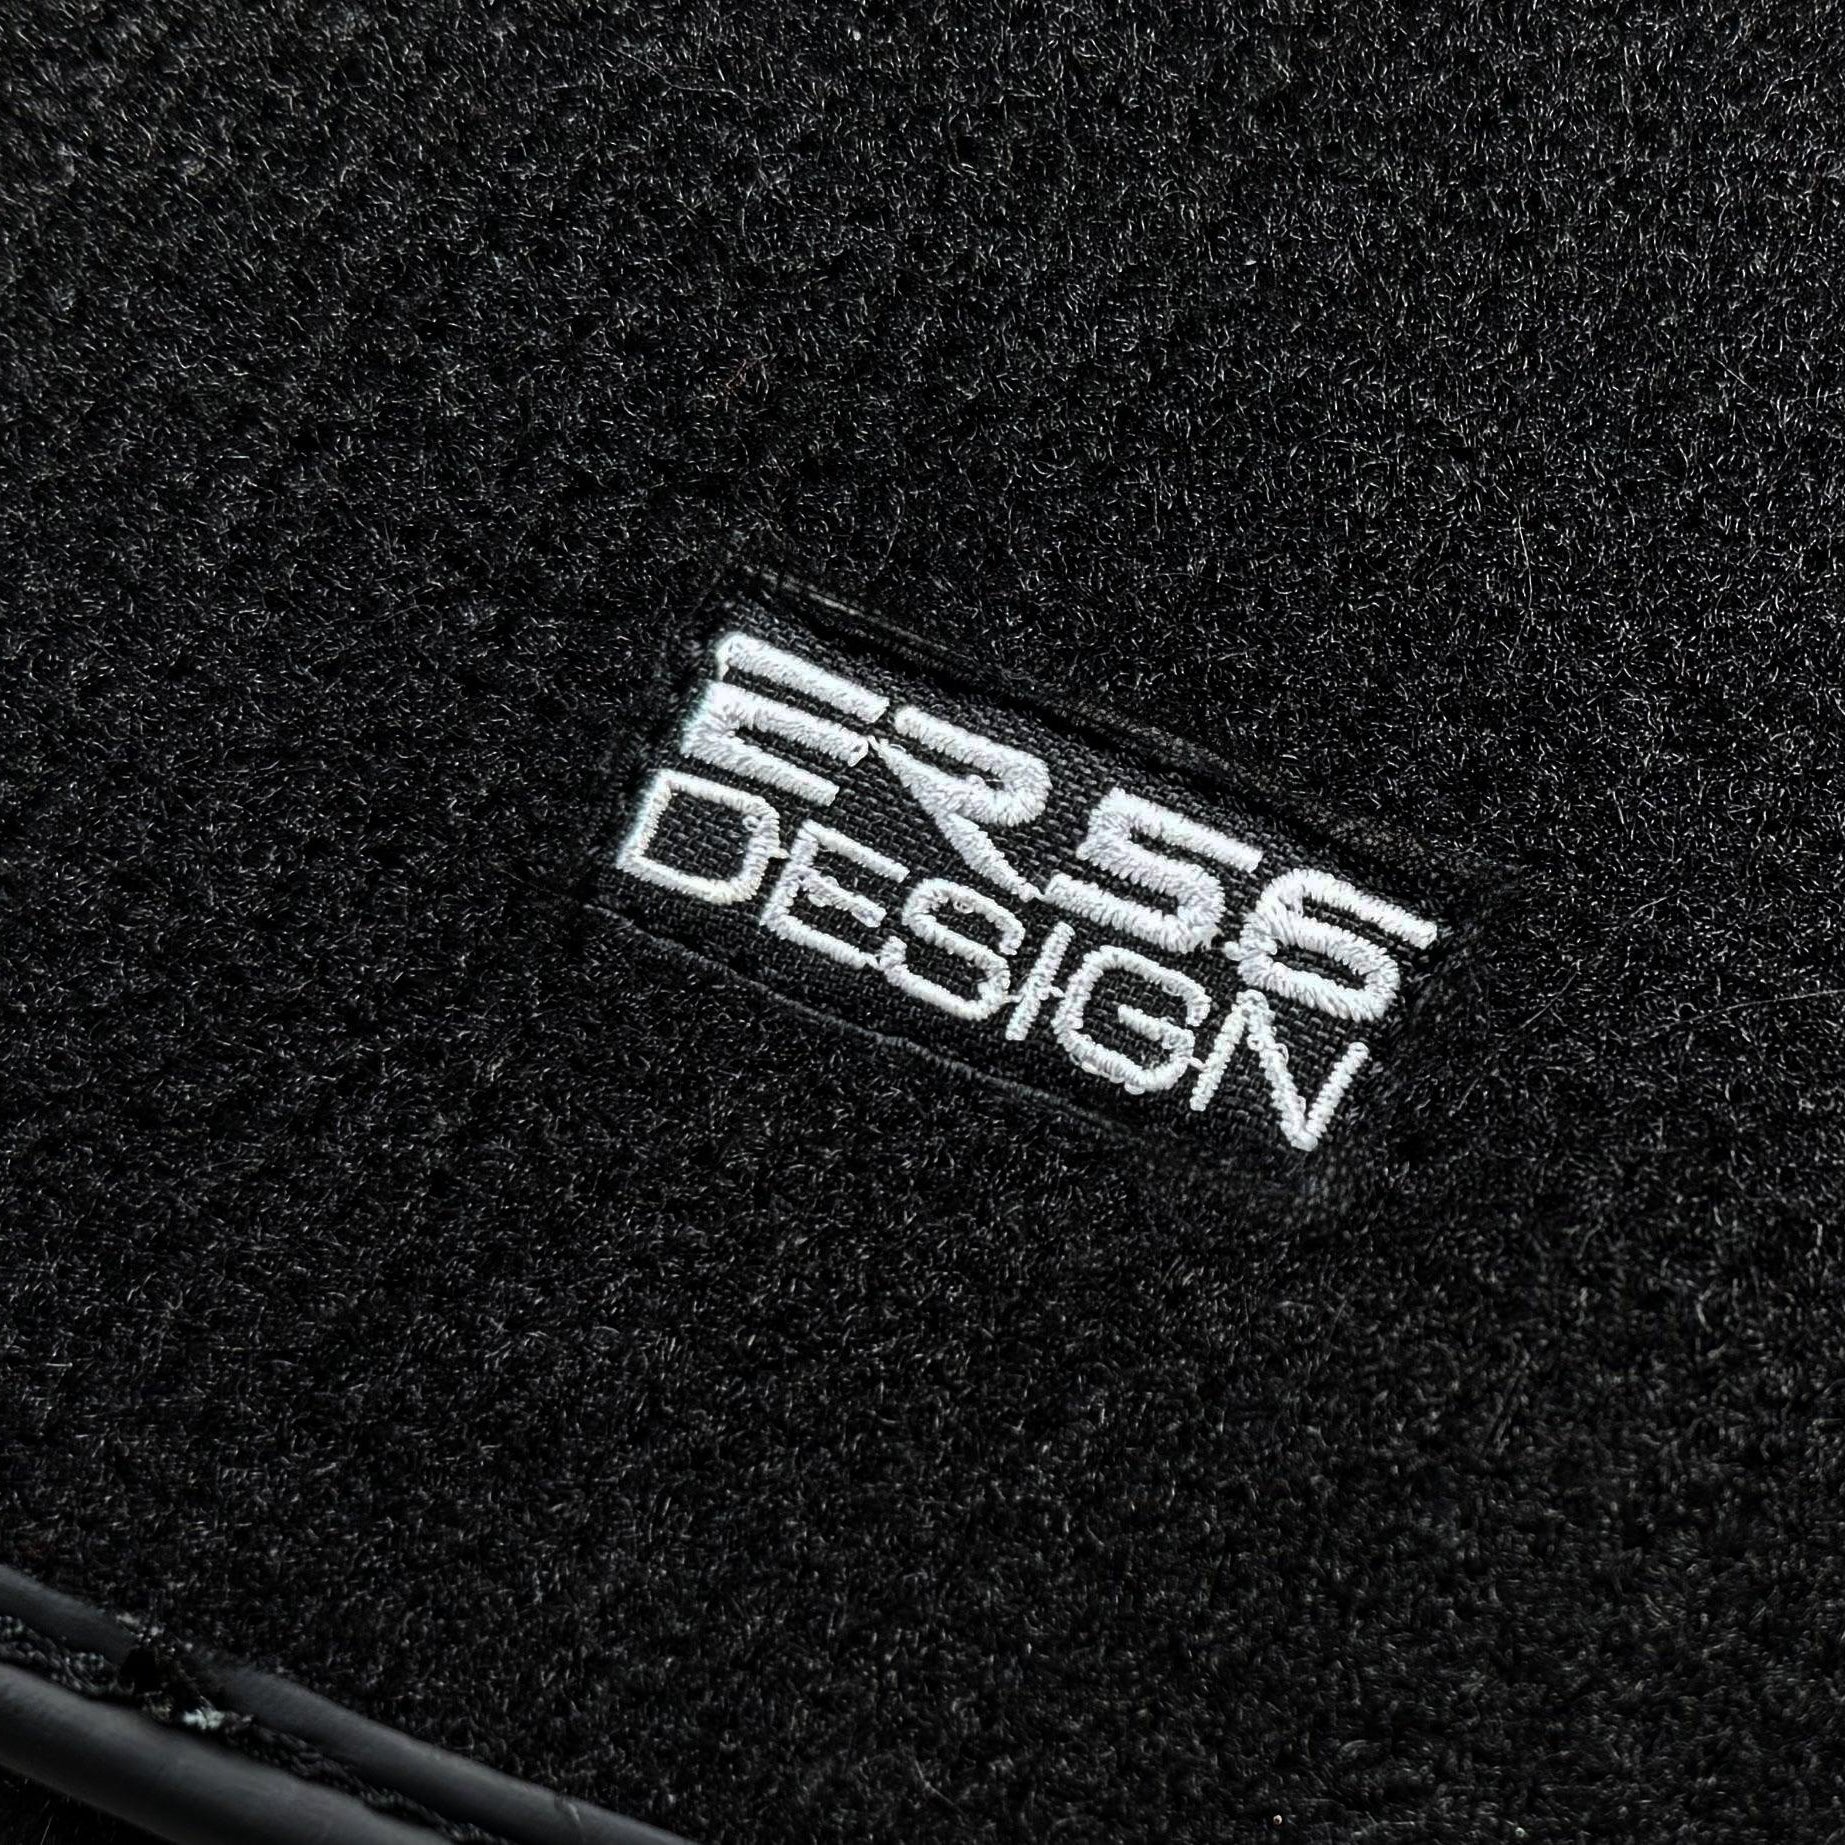 Black Sheepskin Floor Mats For BMW 5 Series G30 ER56 Design